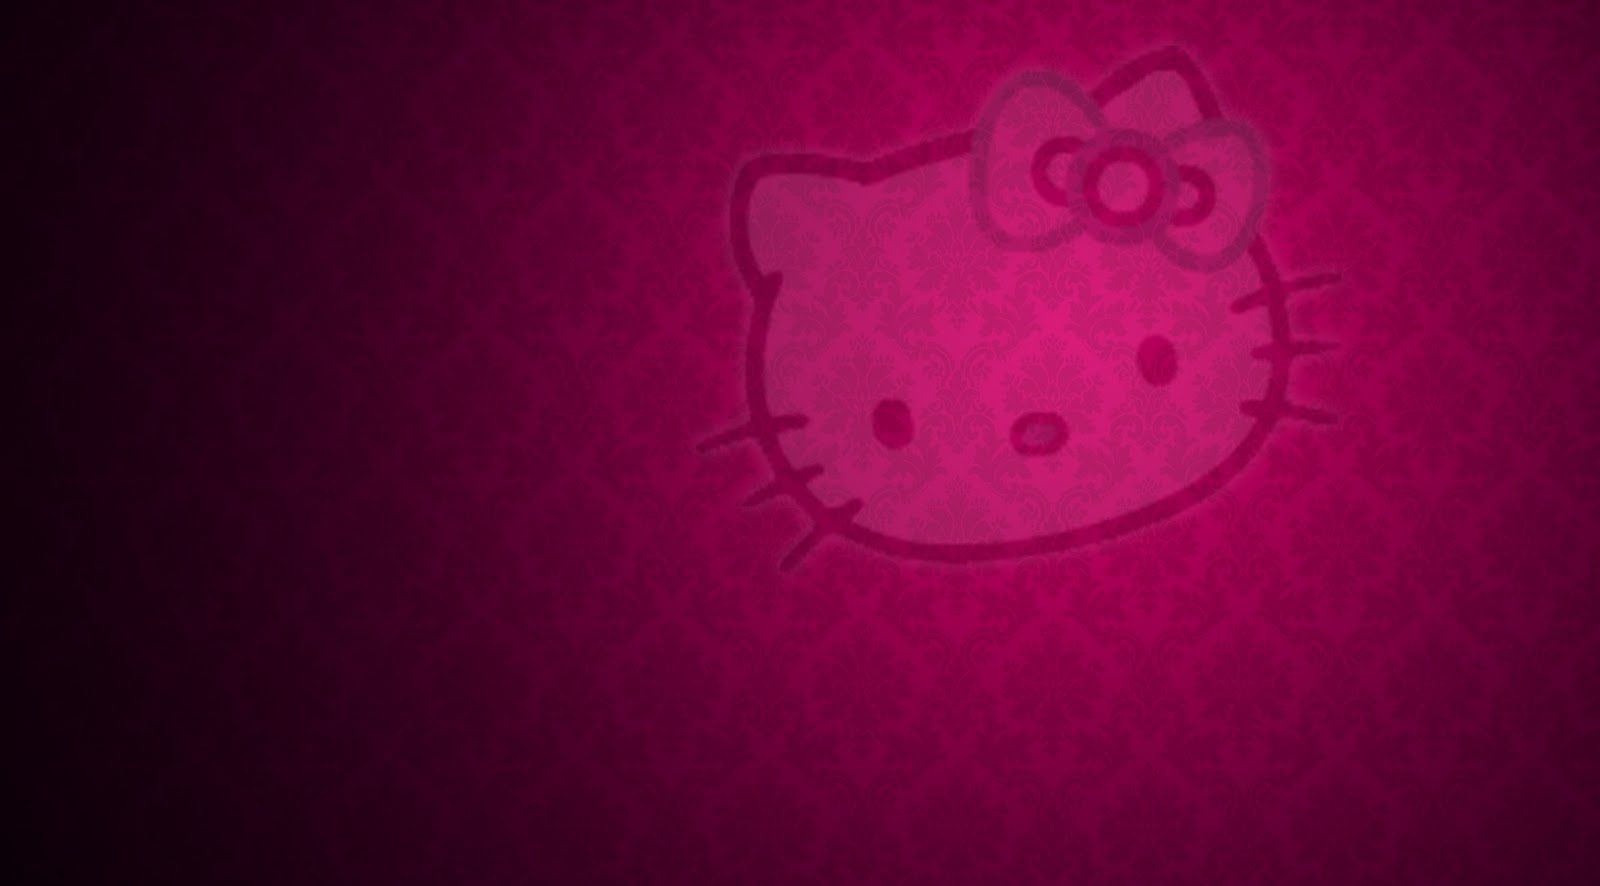 HD Hello Kitty Wallpaper For Desktop